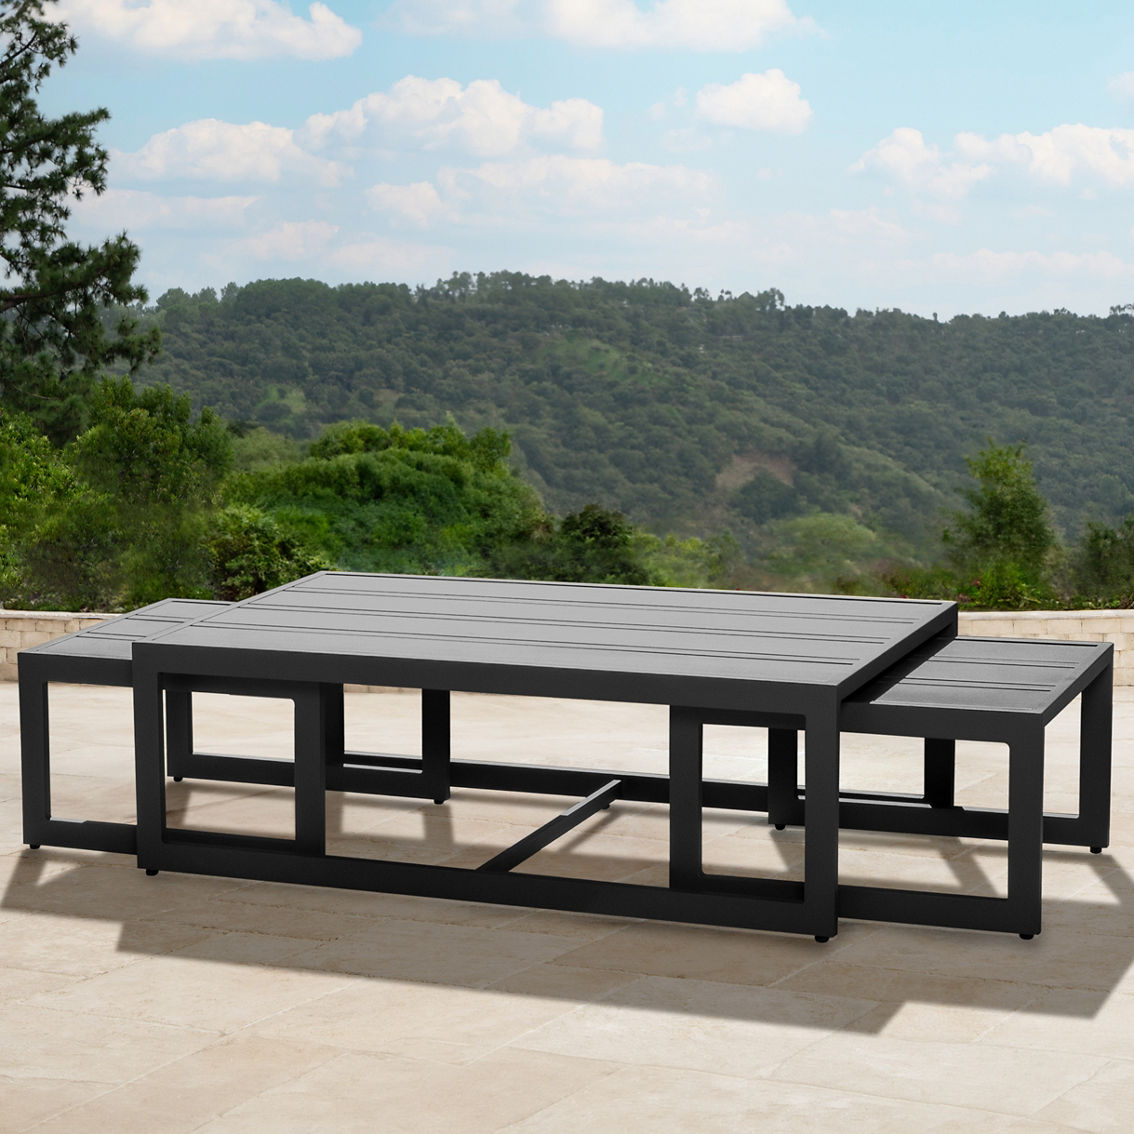 Abbyson Tori Outdoor 3-pc Nesting Table Set, White Fabric & Black Frame - Image 4 of 5